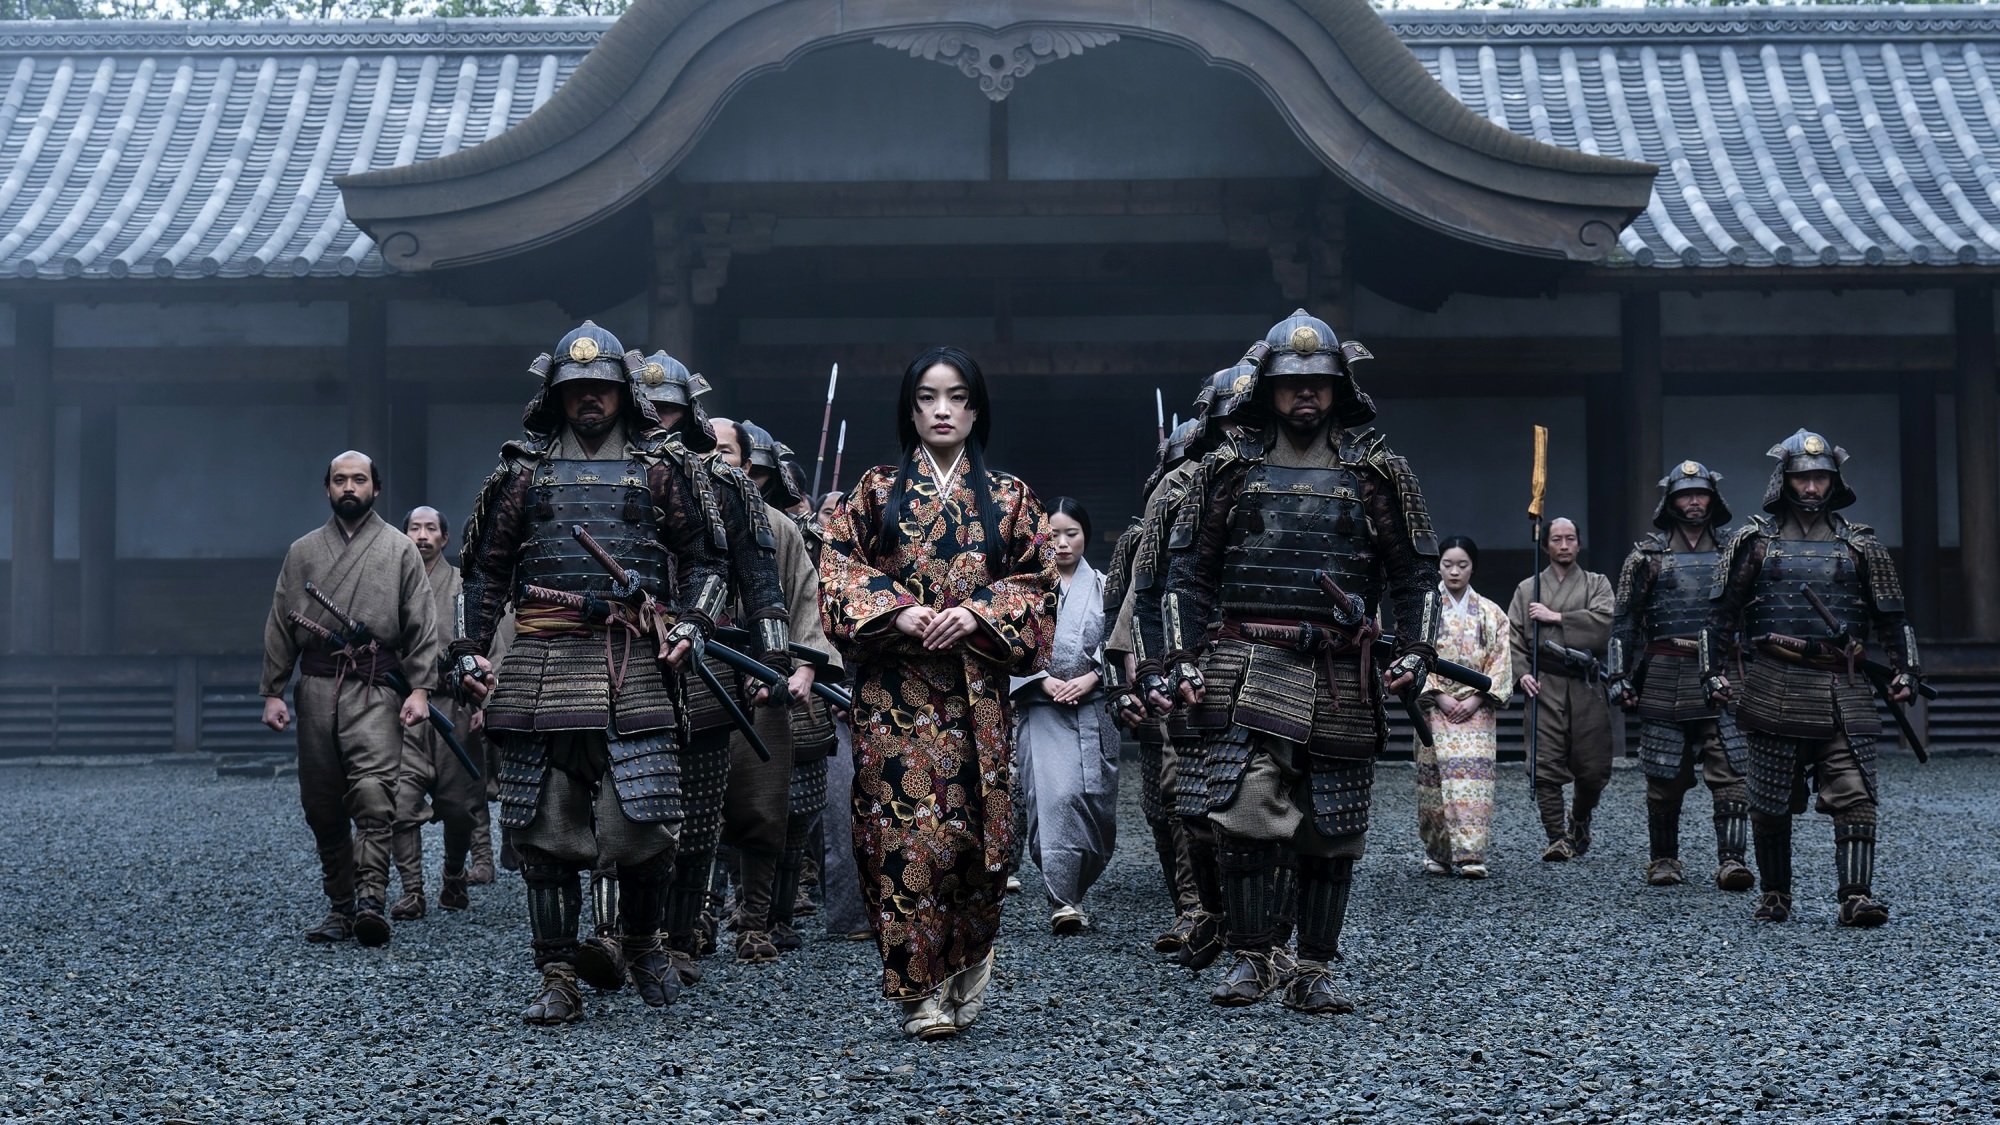 Mariko from "Shōgun" walking with her retinue of soldiers.